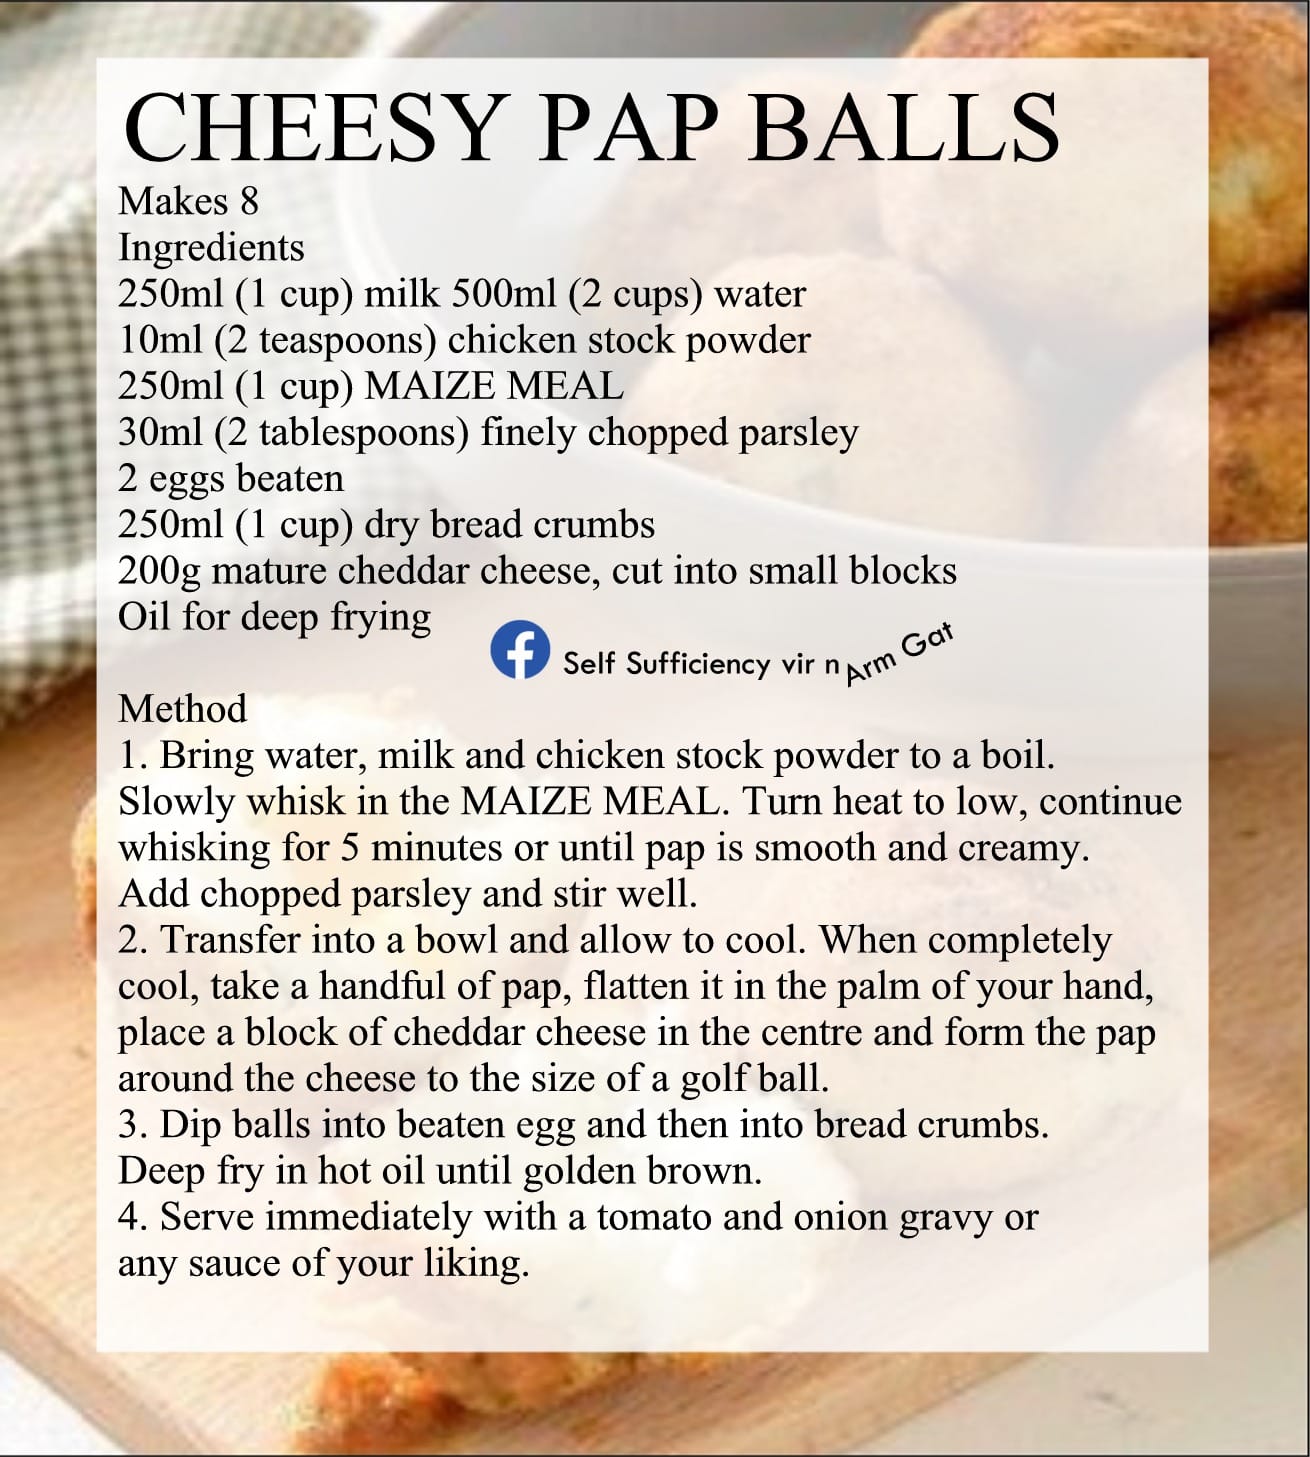 Cheesy Pap Balls